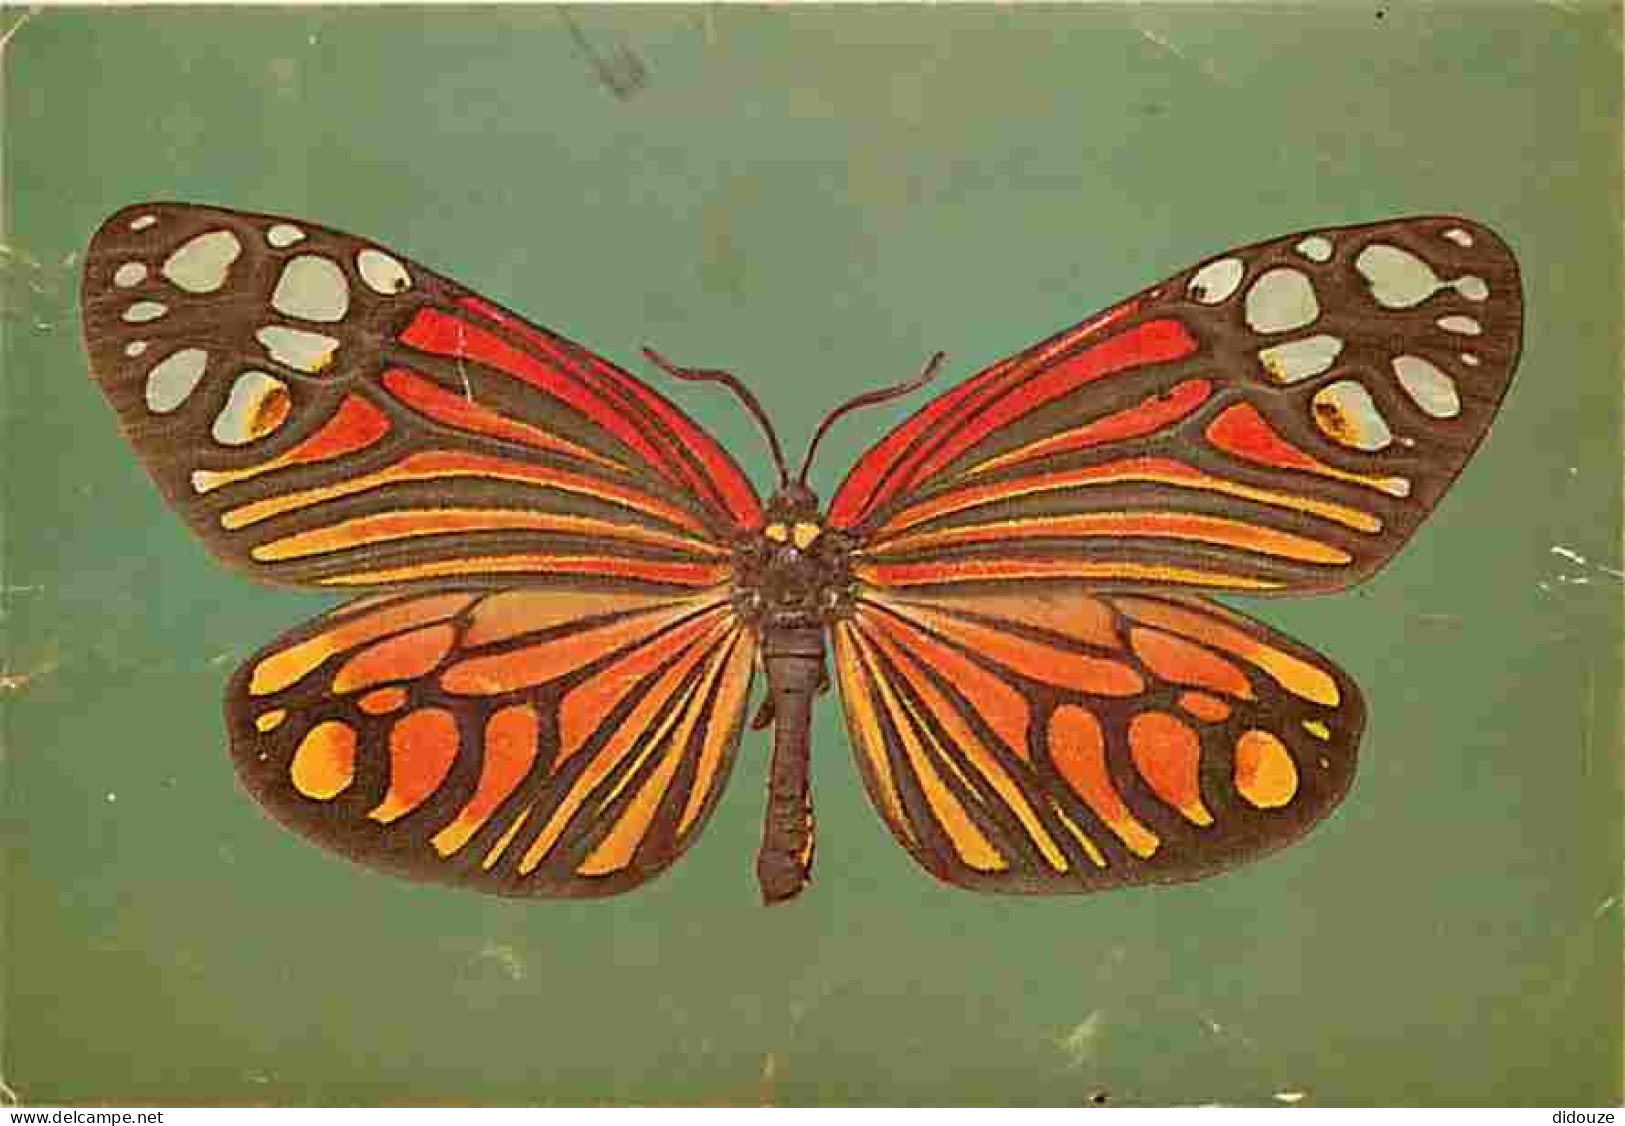 Animaux - Papillons - Tropical Moths - Campylotes Kotzschi - Zygaenidae - CPM - Voir Scans Recto-Verso - Papillons